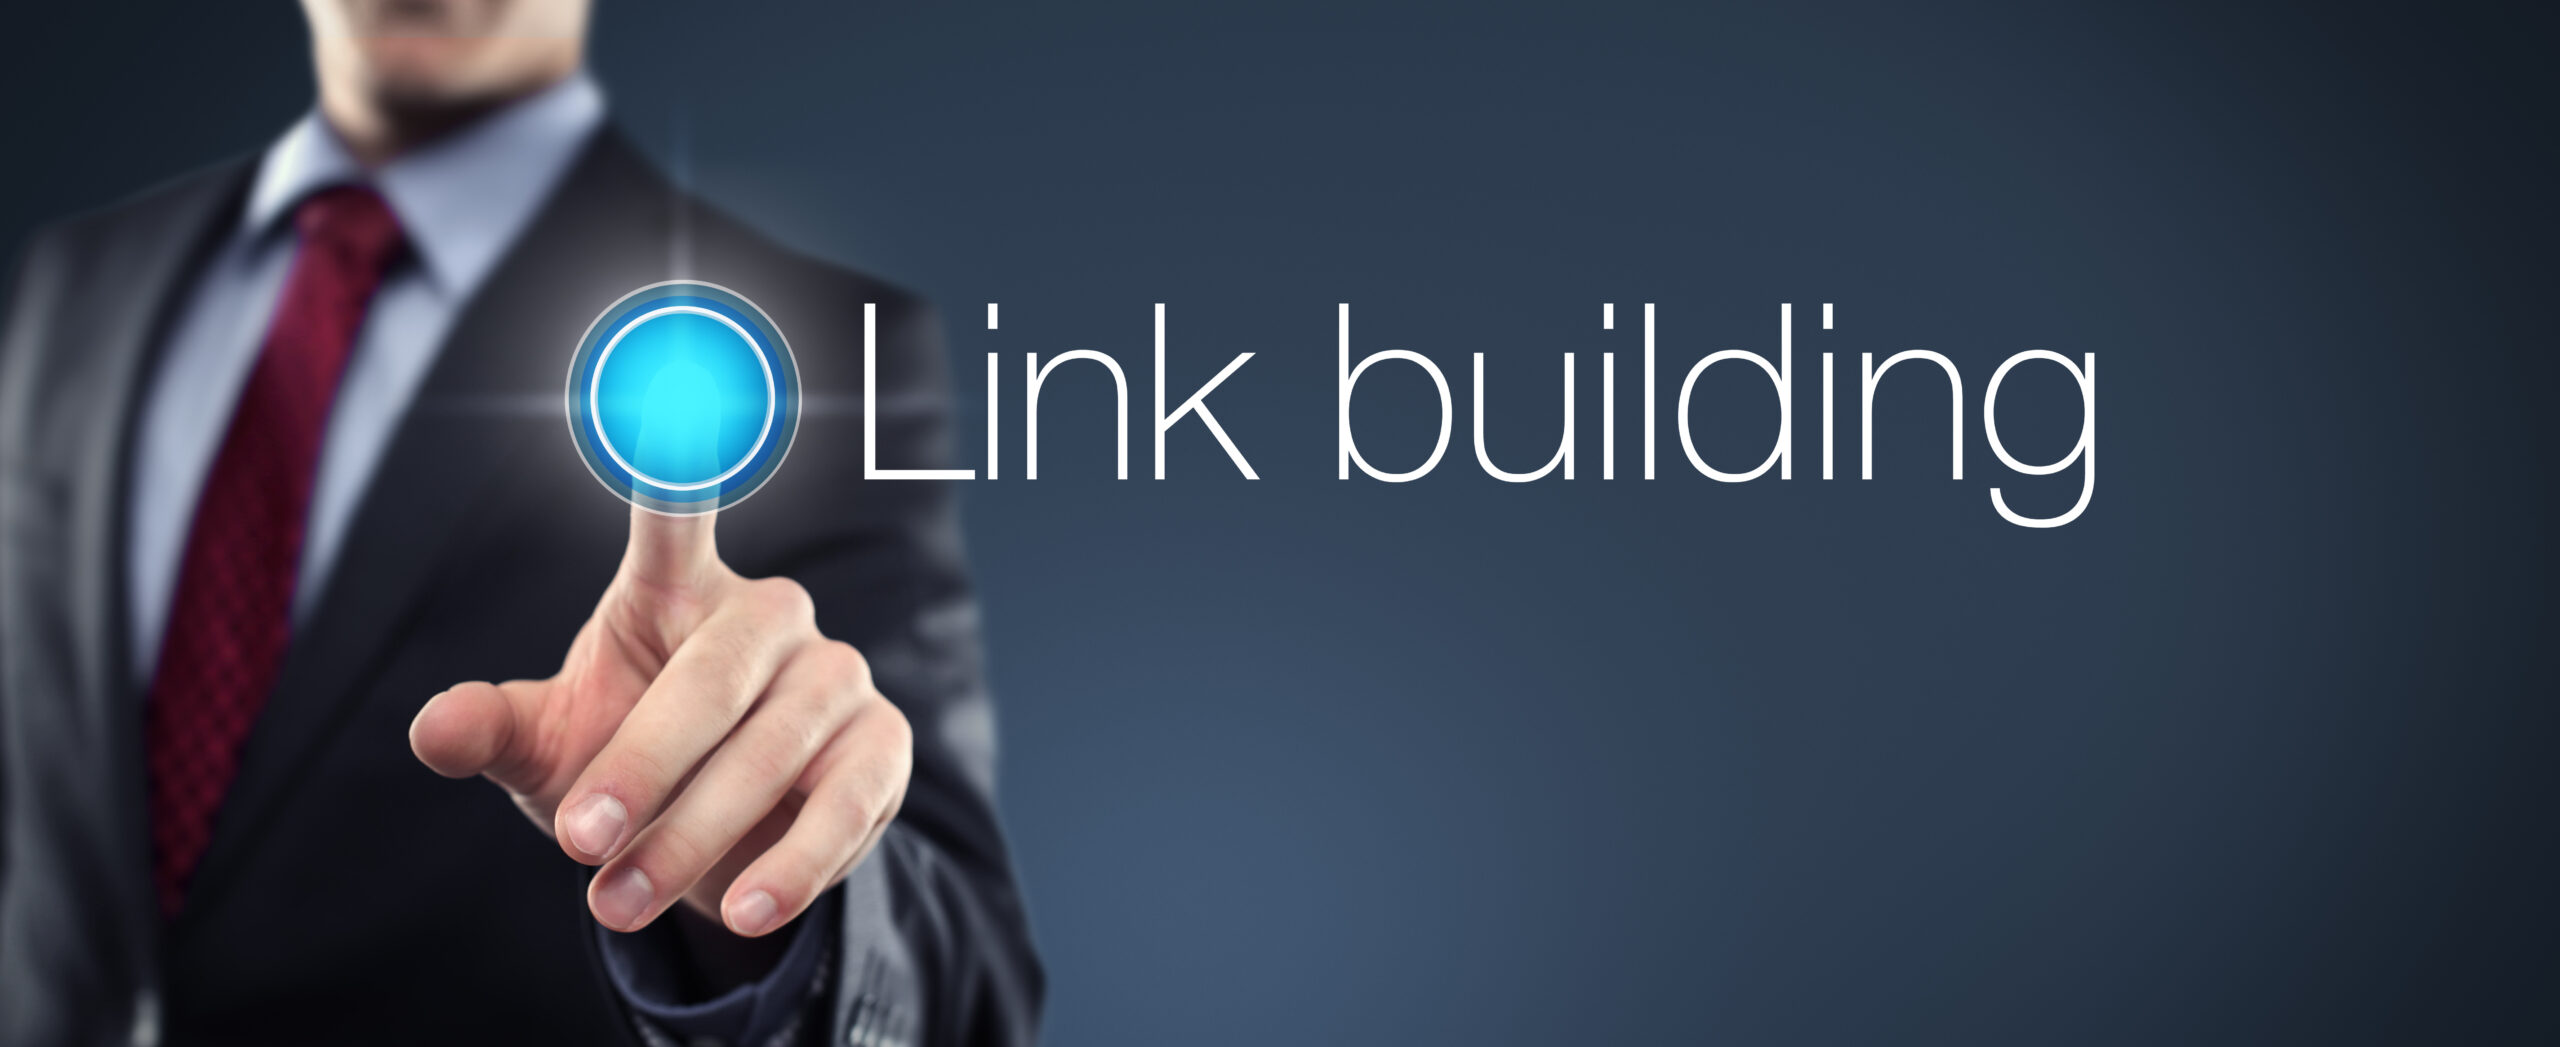 linkbuilding_strategie